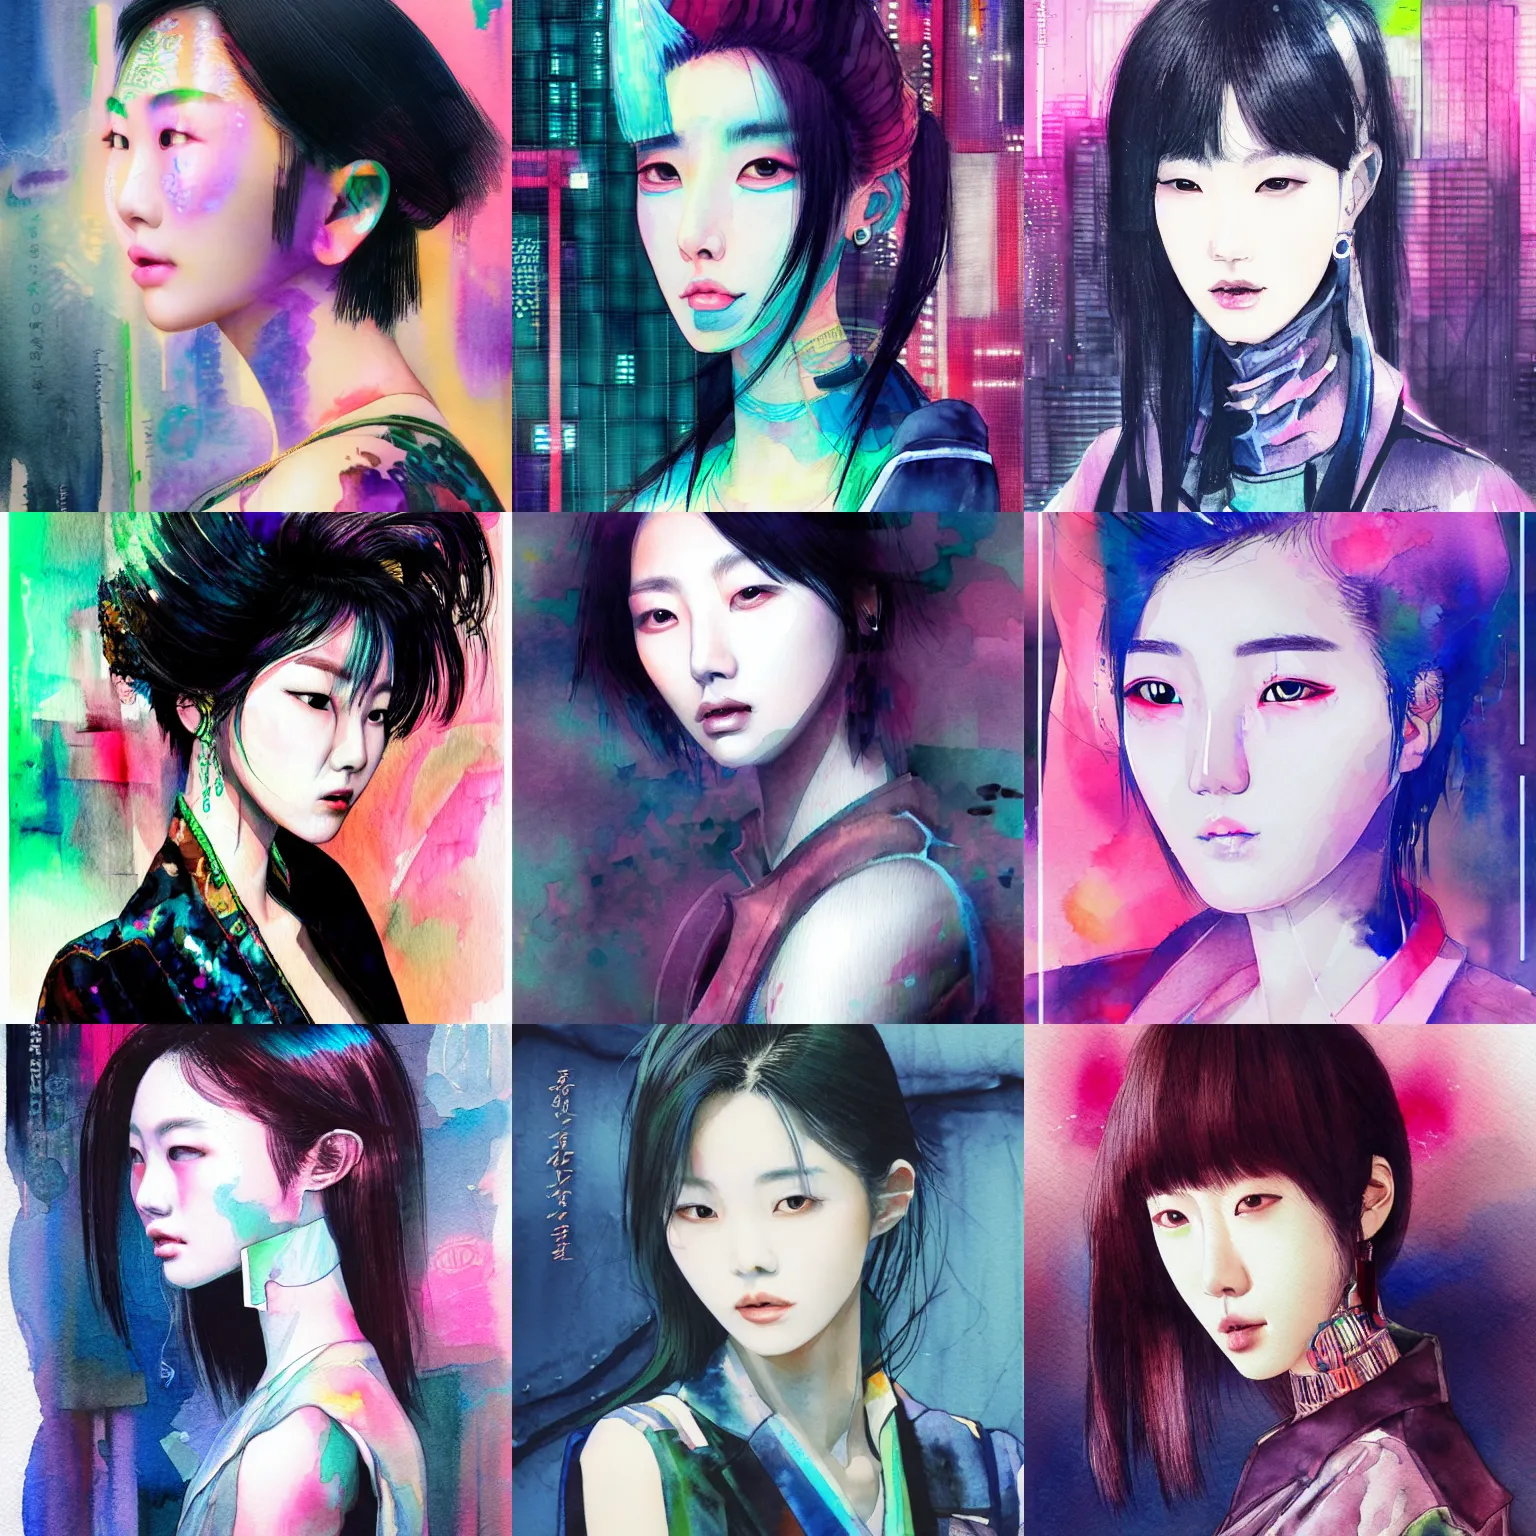 Prompt: korean women's fashion model, intricate watercolor cyberpunk vaporwave portrait by fiona staples